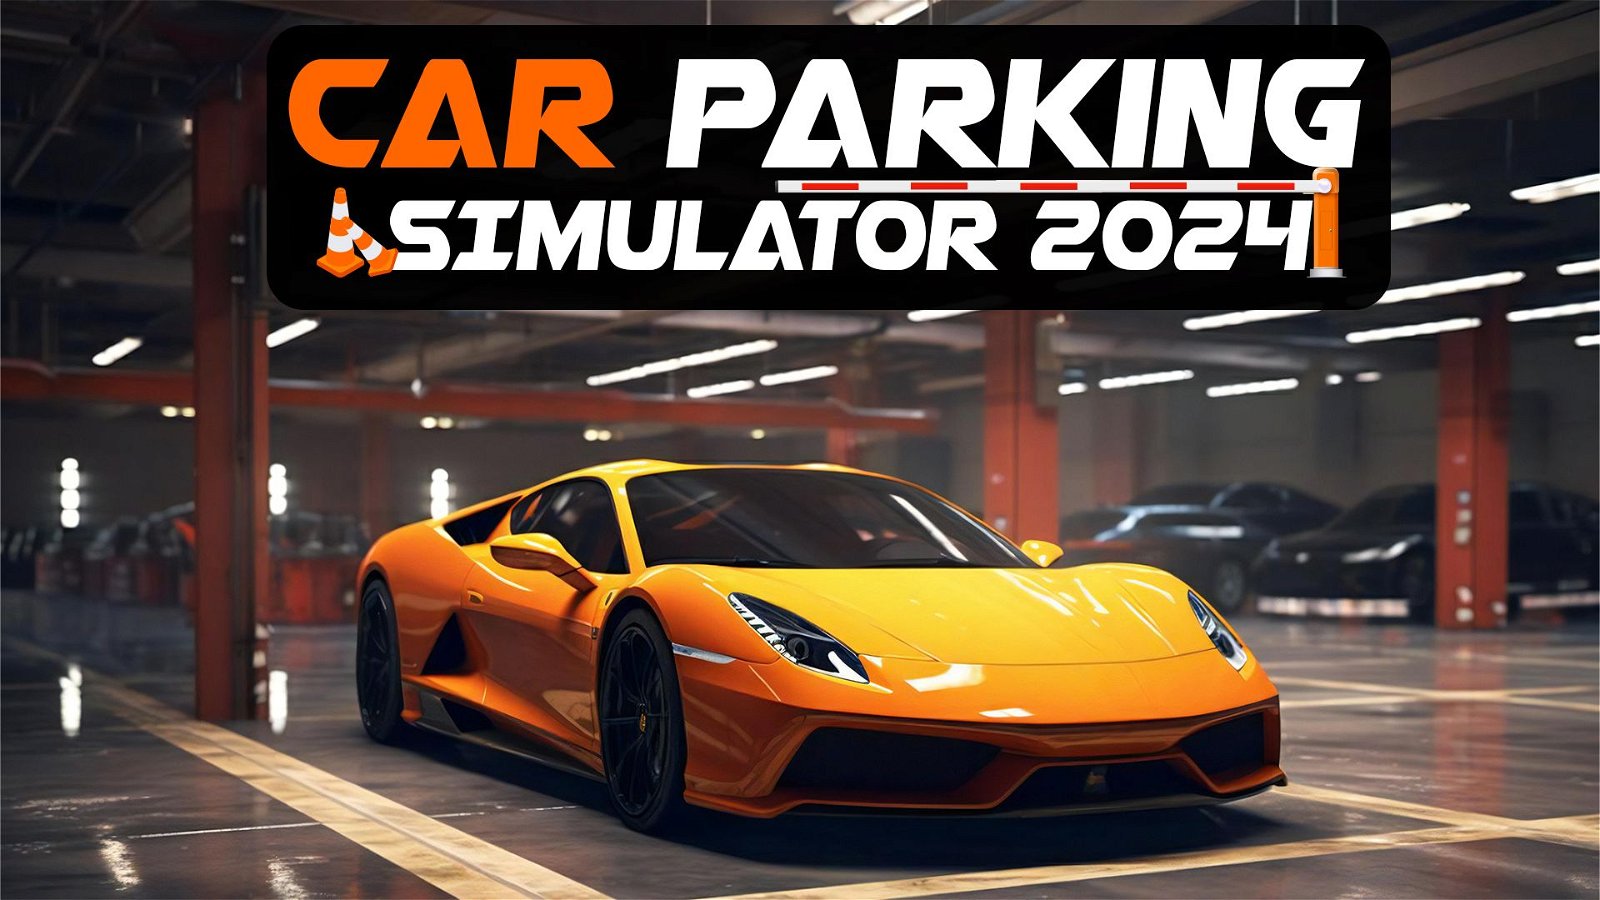 Image of Car Parking Simulator 2024